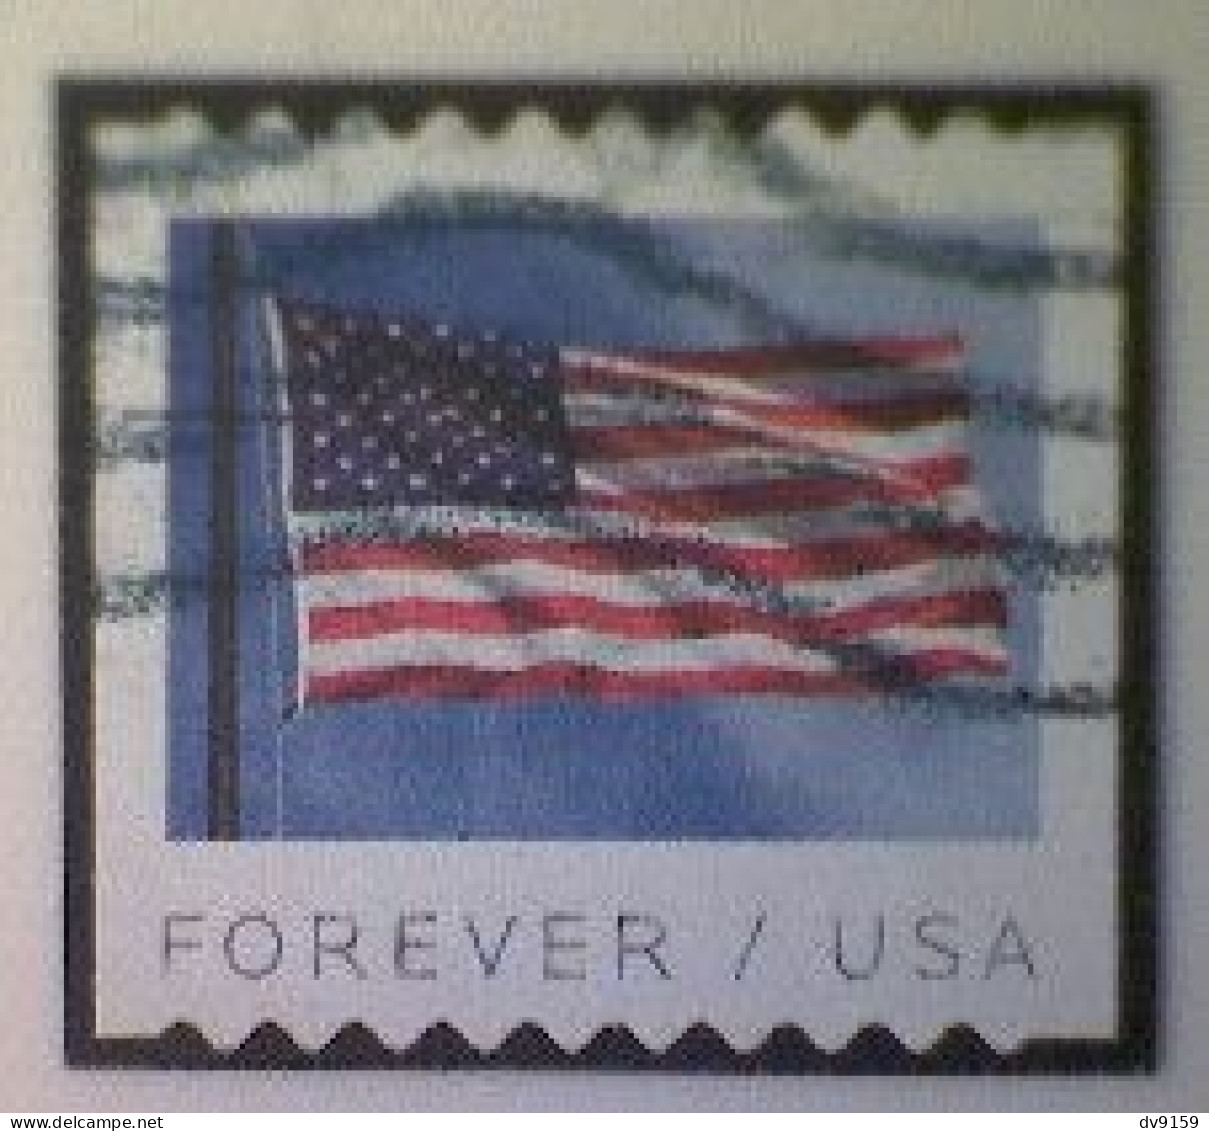 United States, Scott #5342, Used(o) Coil, 2019, Flag Definitive, (55¢) - Usados